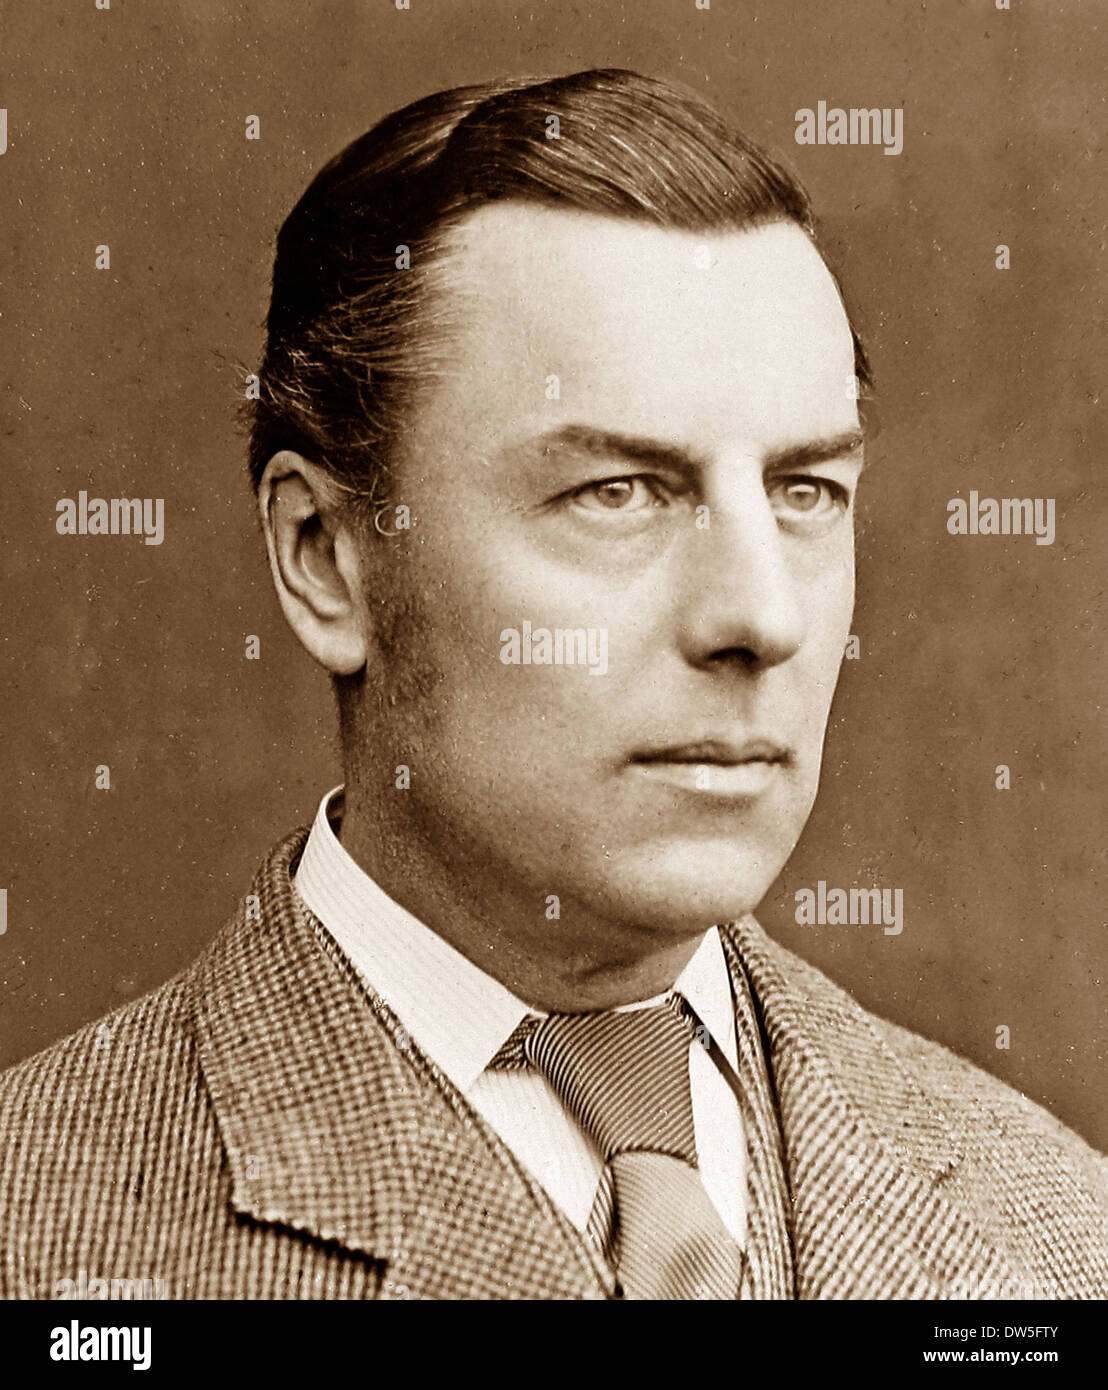 Rt Hon Joseph Chamberlain MP - sindaco di Birmingham - padre di Neville Chamberlain - periodo Vittoriano Foto Stock